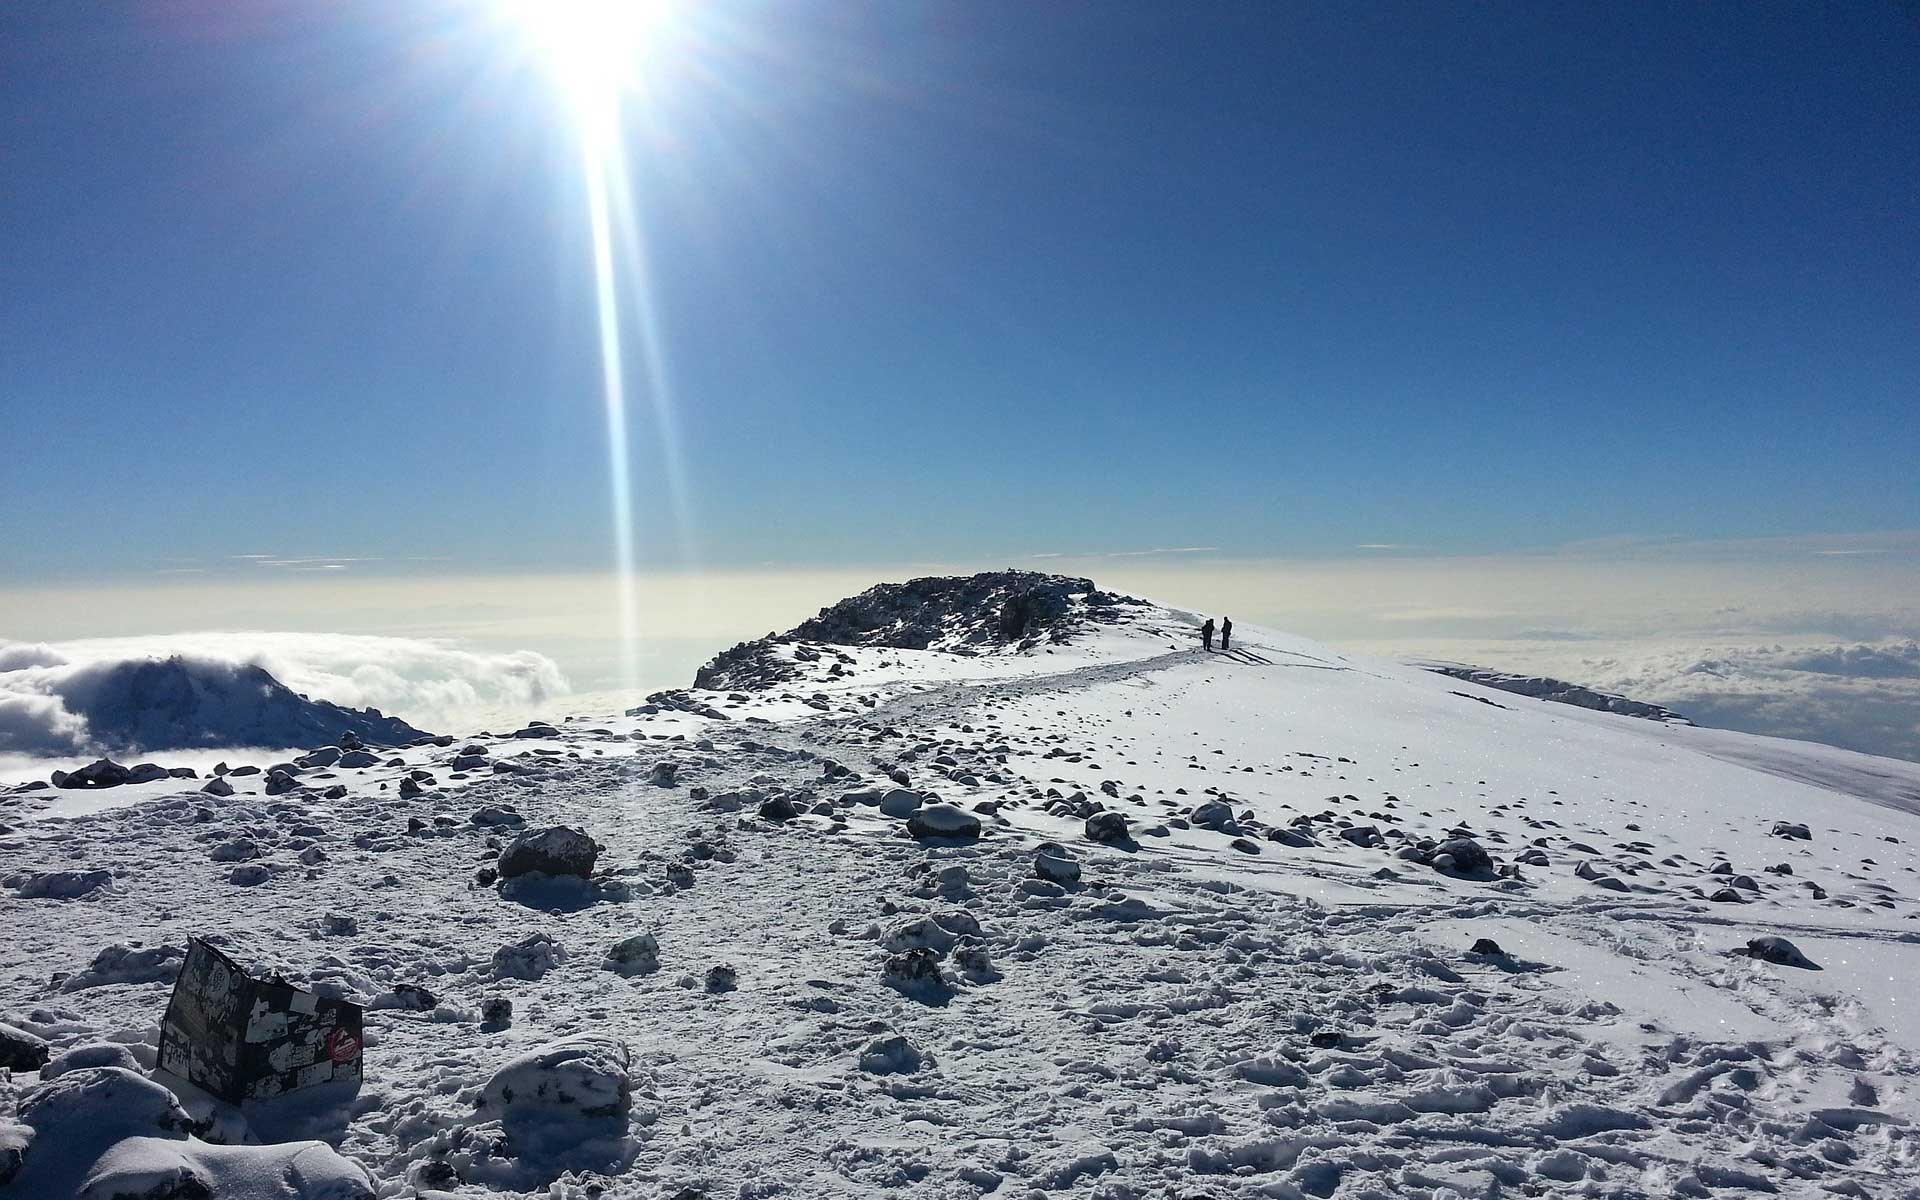 Blue skies and snow at the peak of africas tallest mountain kilimanjaro tanzania